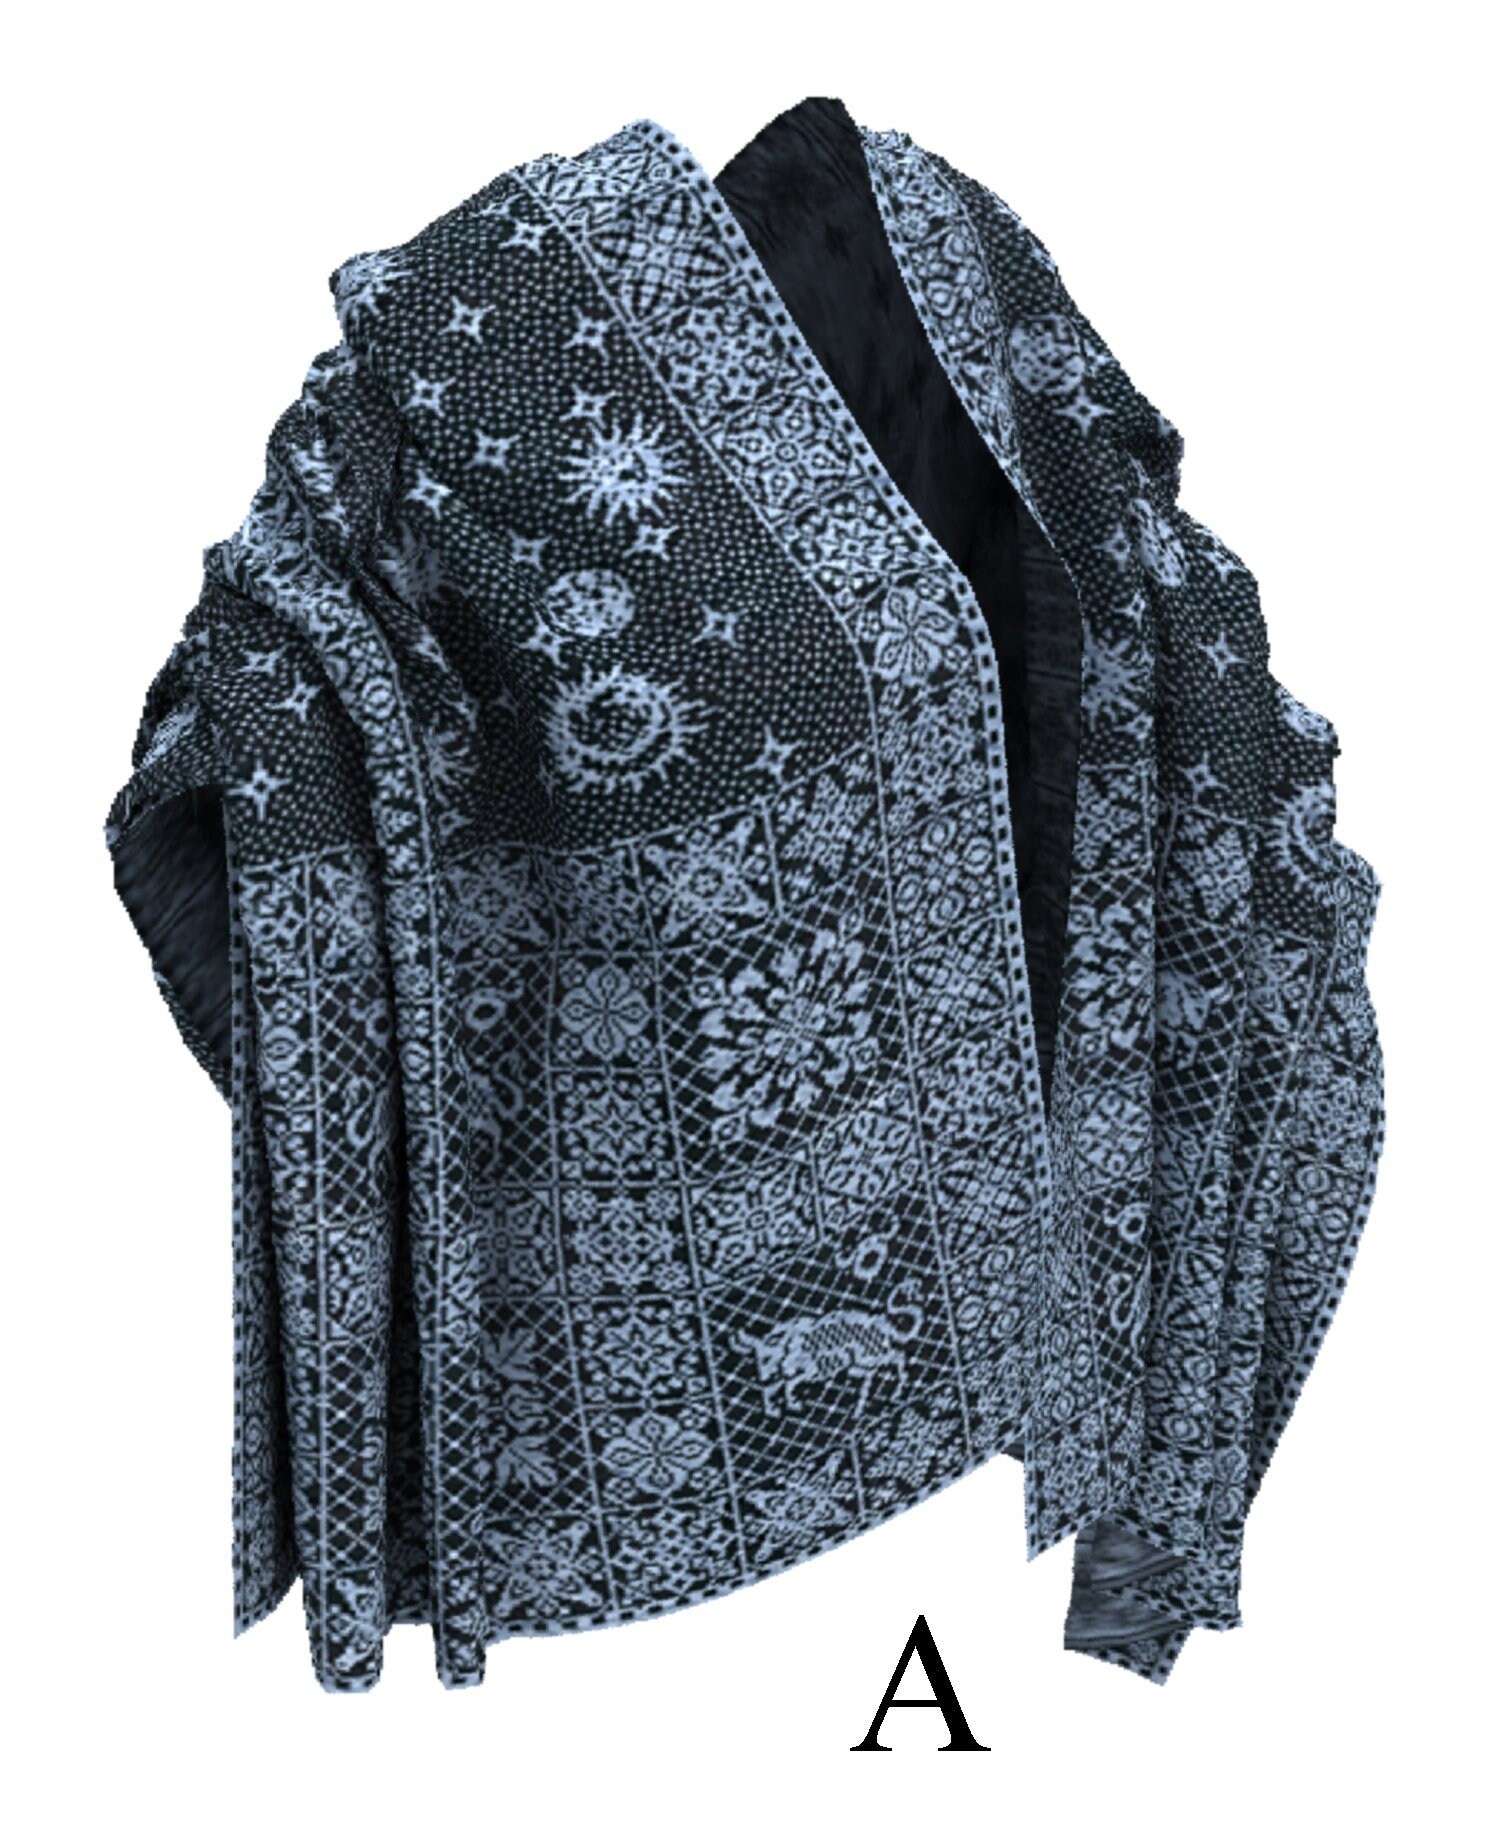 Taurus zodiac blanket scarf plaid. Light blue and dark blue | Etsy